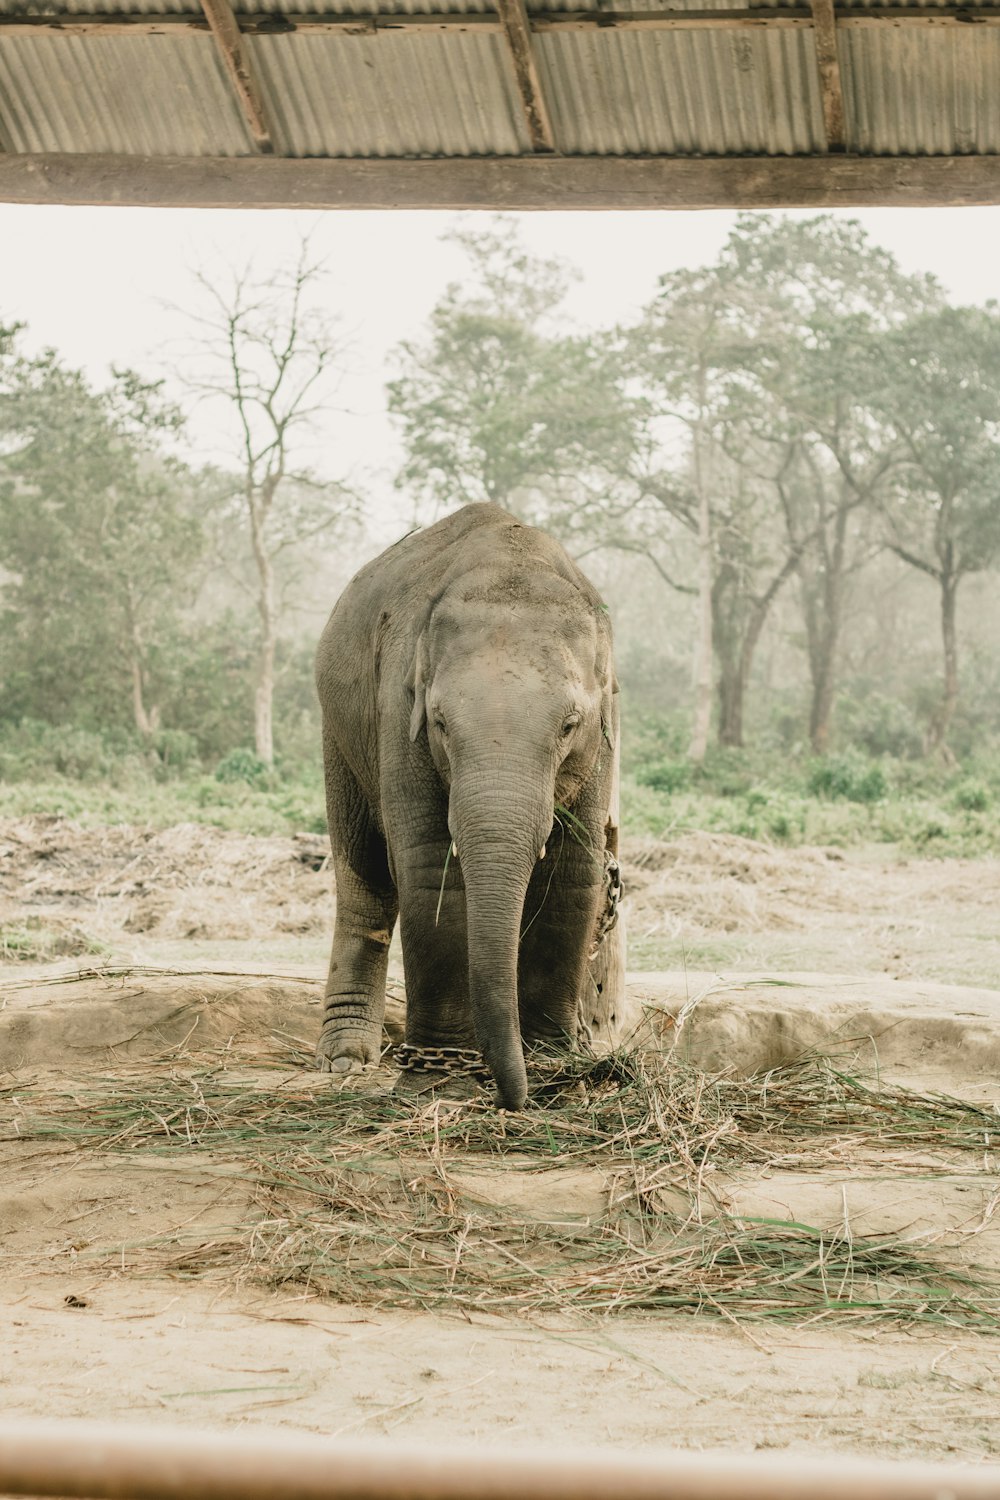 an elephant standing under a wooden structure eating grass